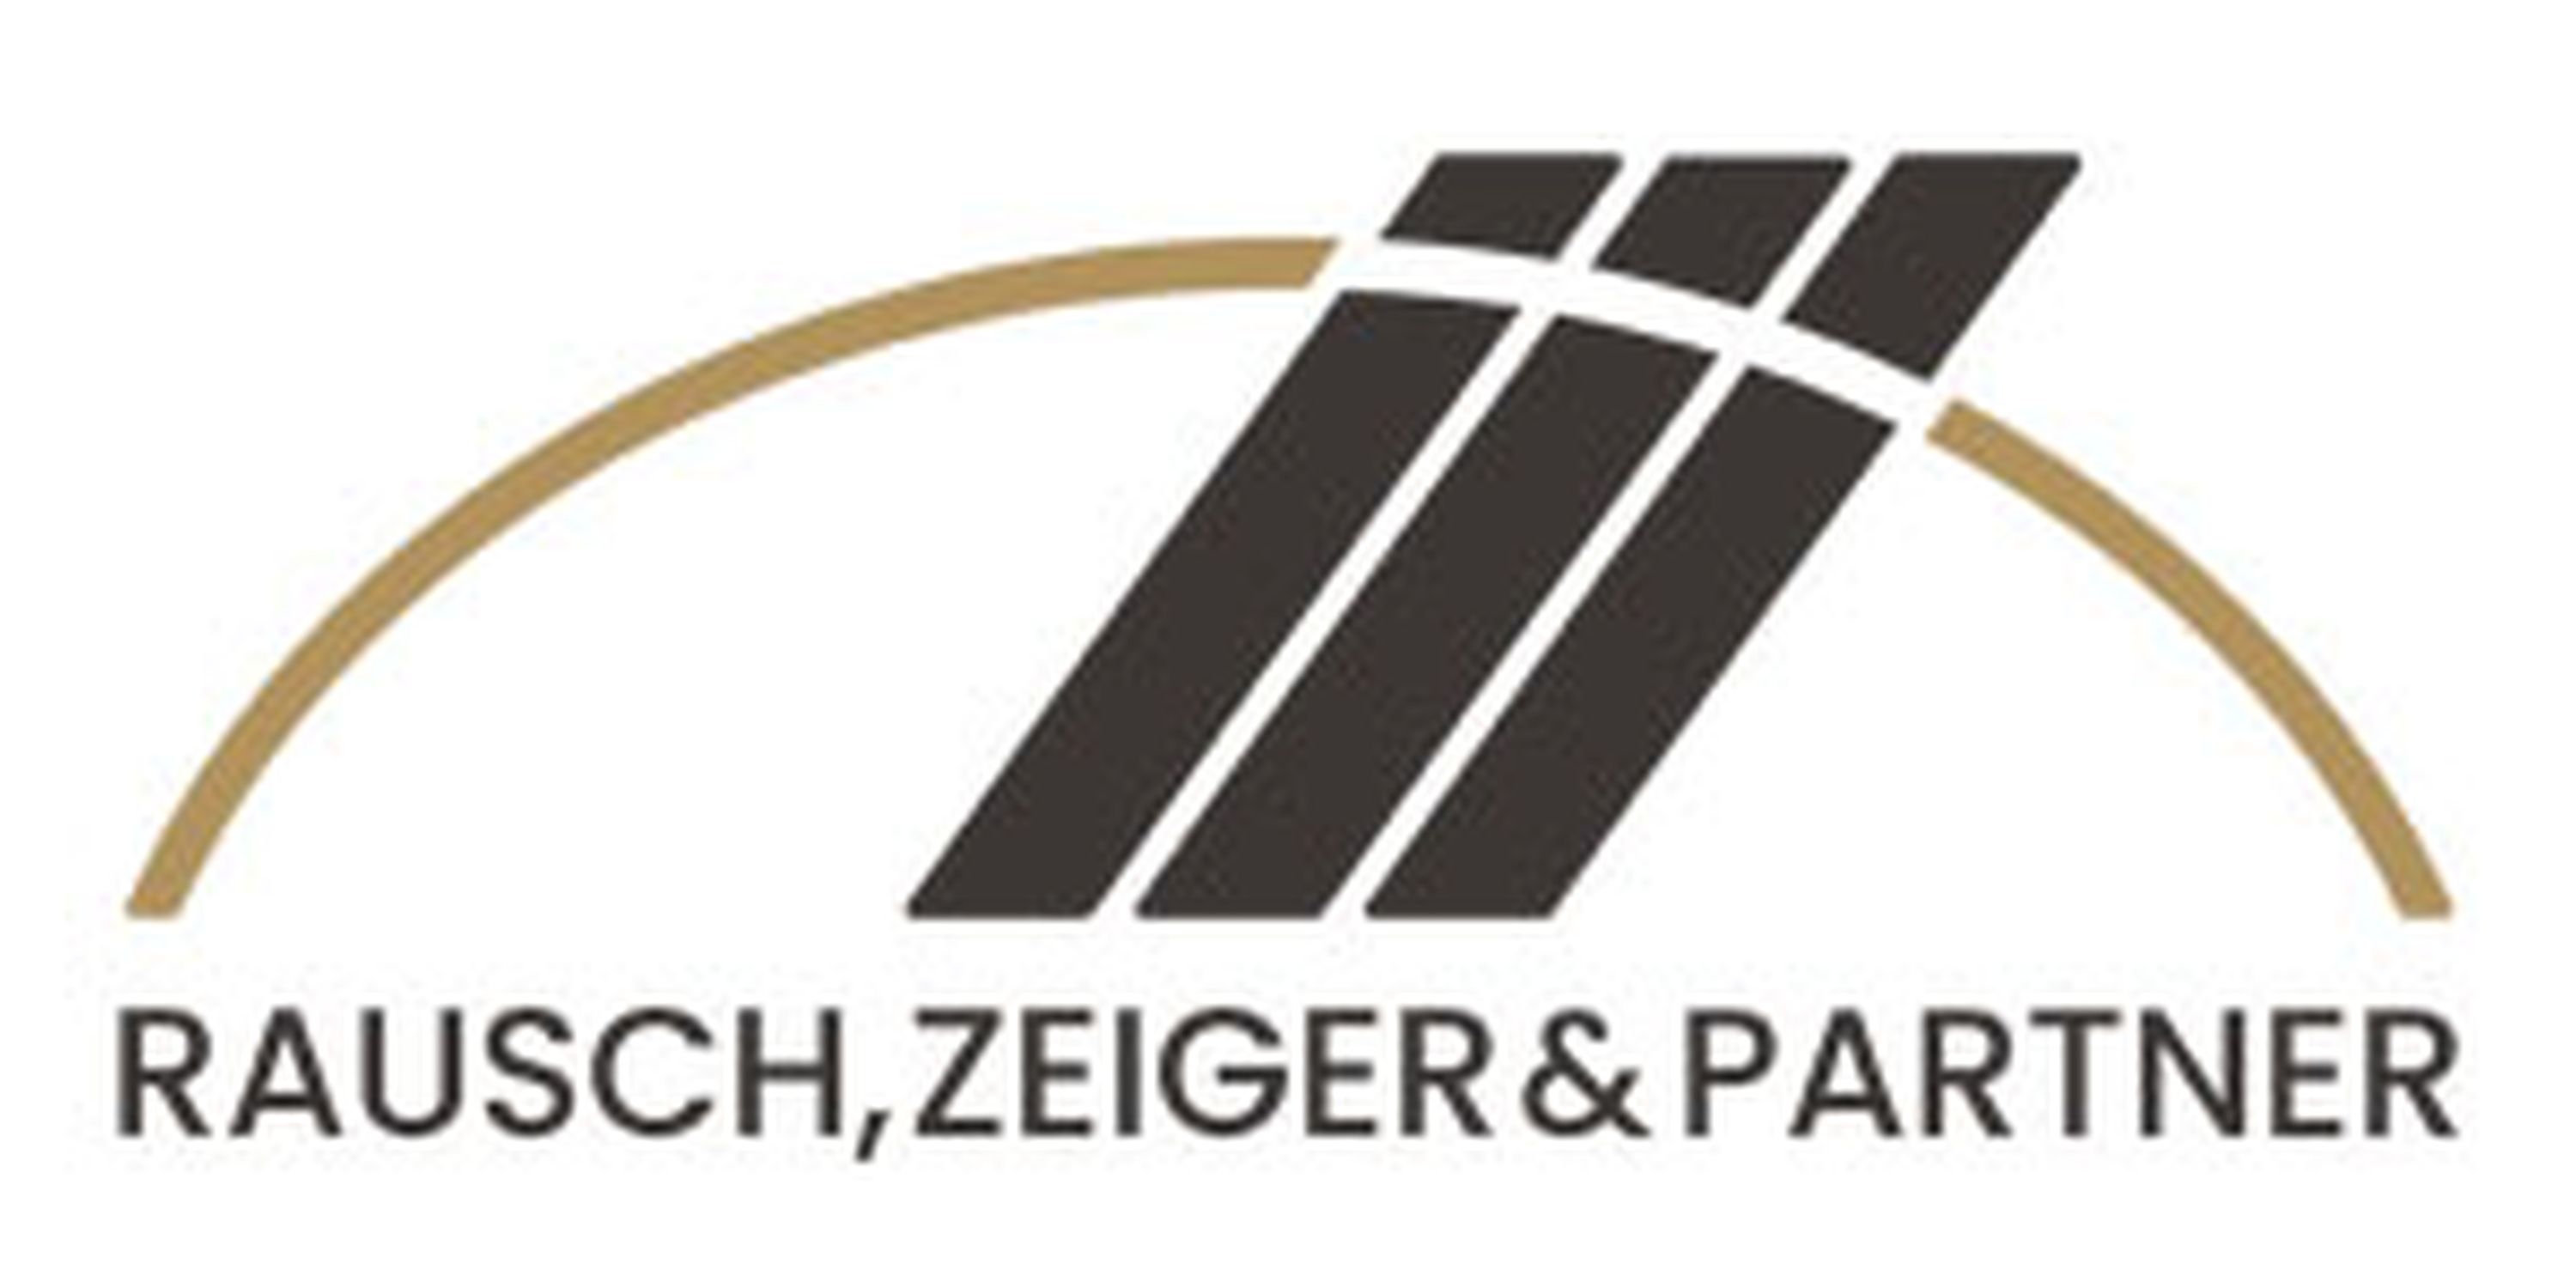 Rausch, Zeiger & Partner